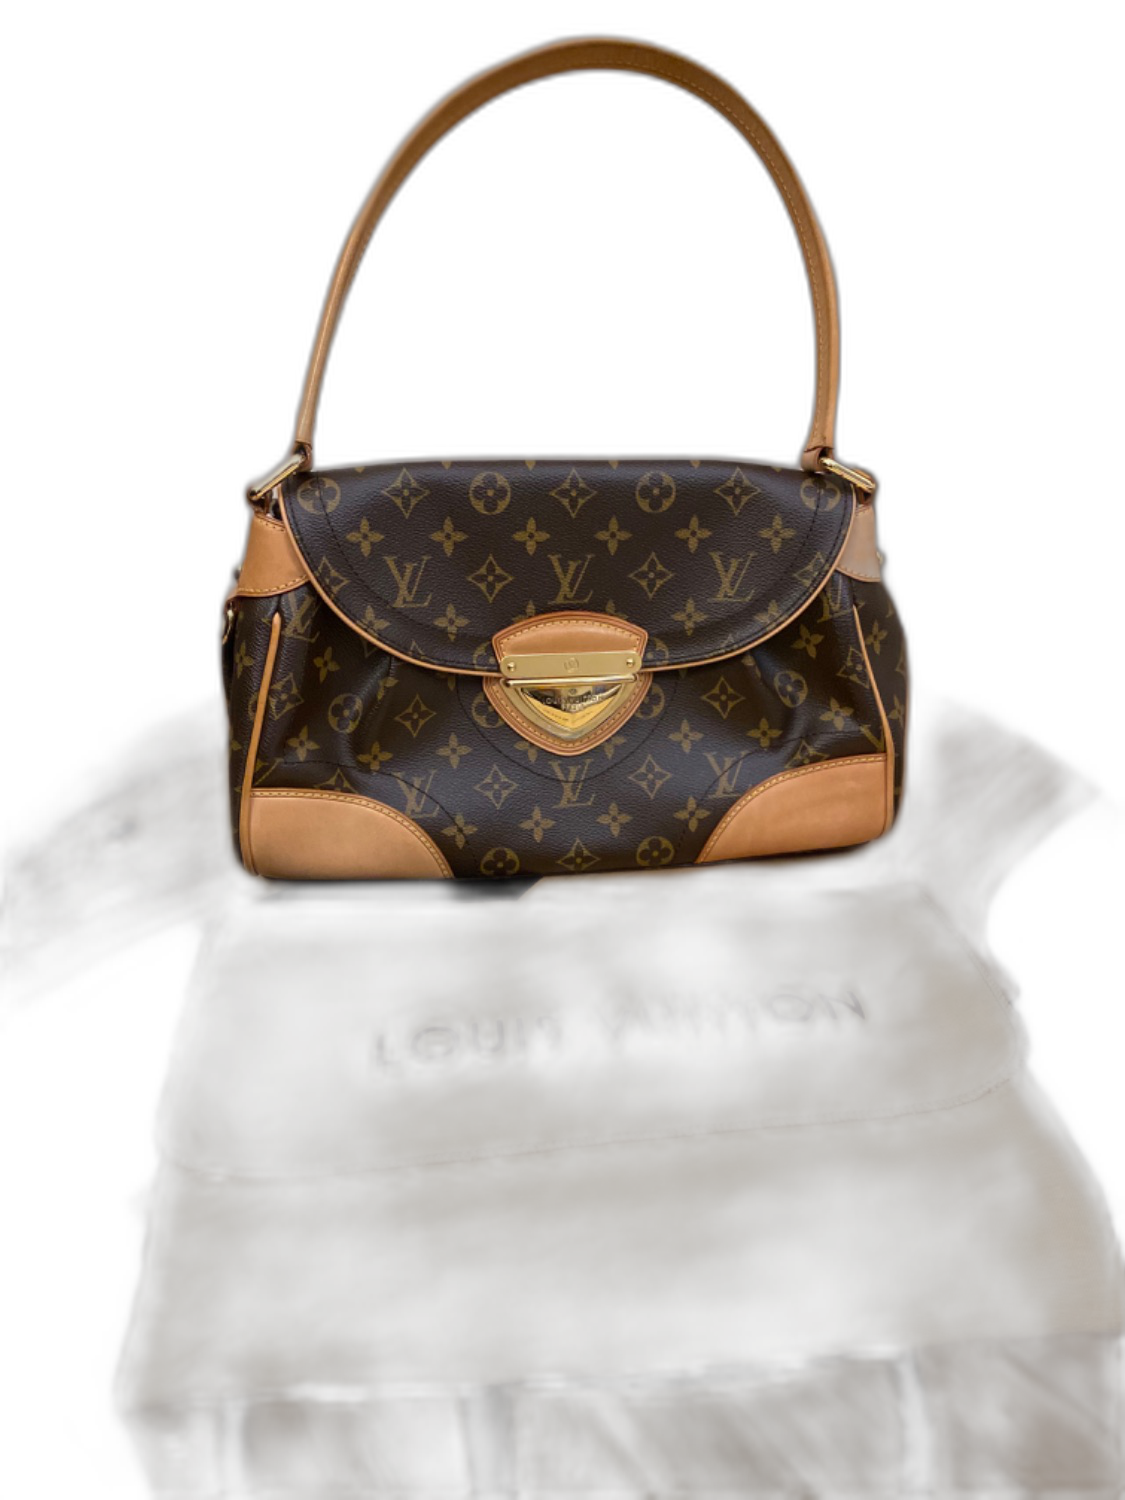 Okazja Oryginalna torebka Louis Vuitton na promocji w Torebki na